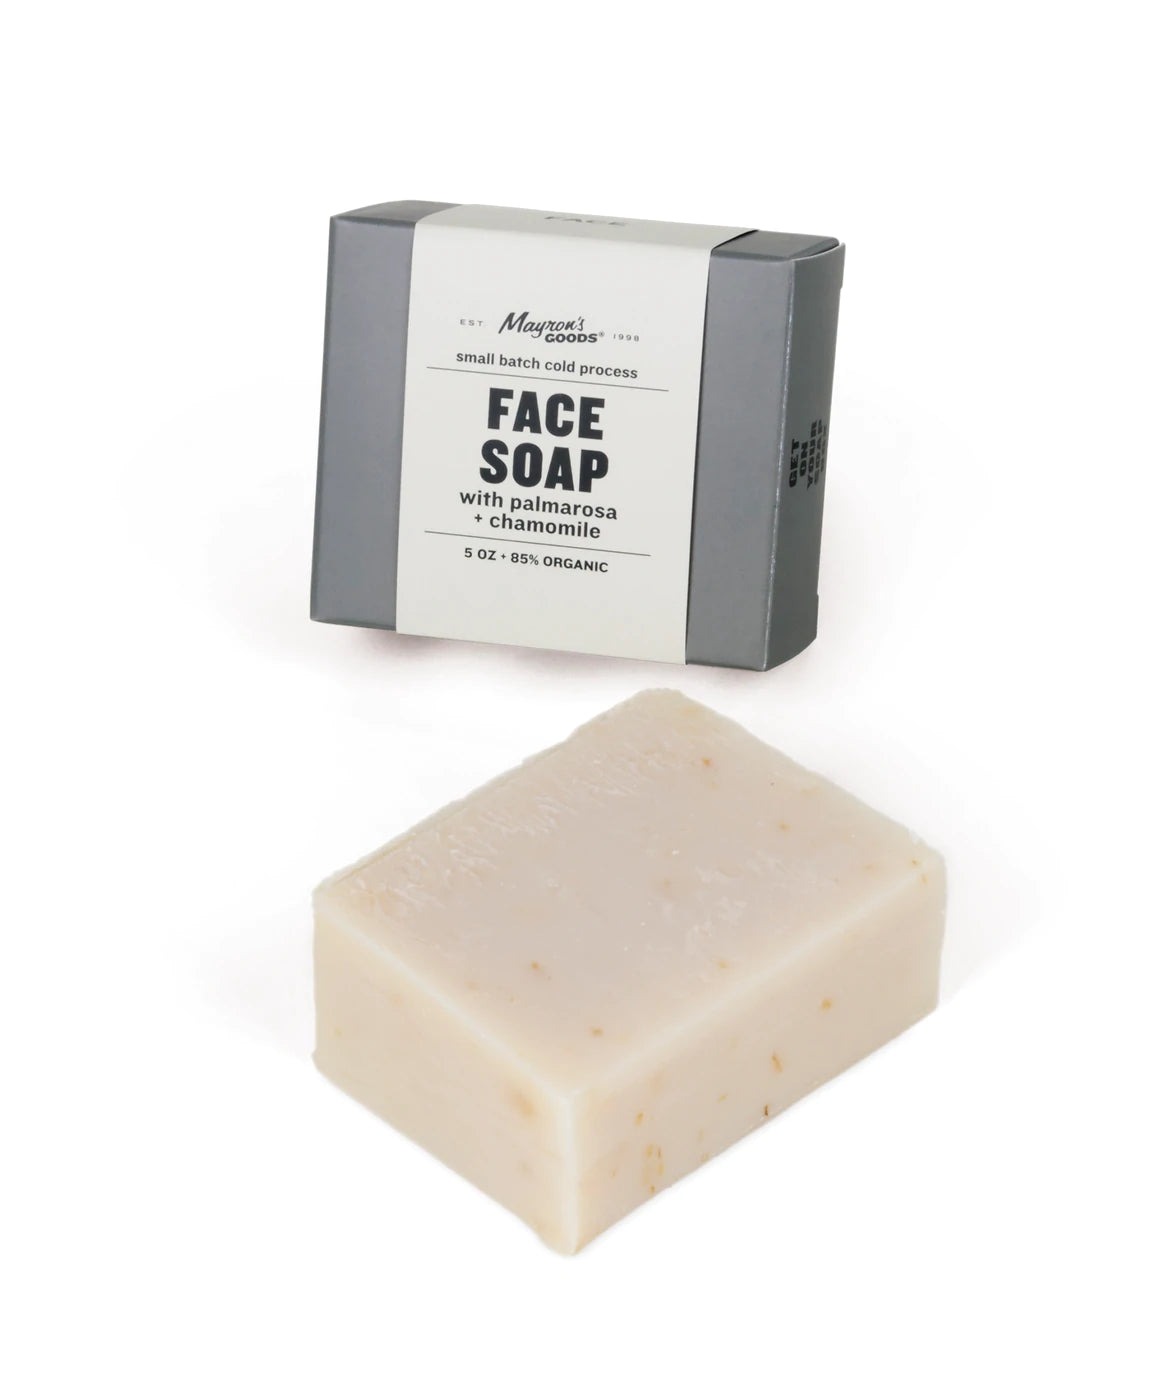 Mayron's Goods Face Soap